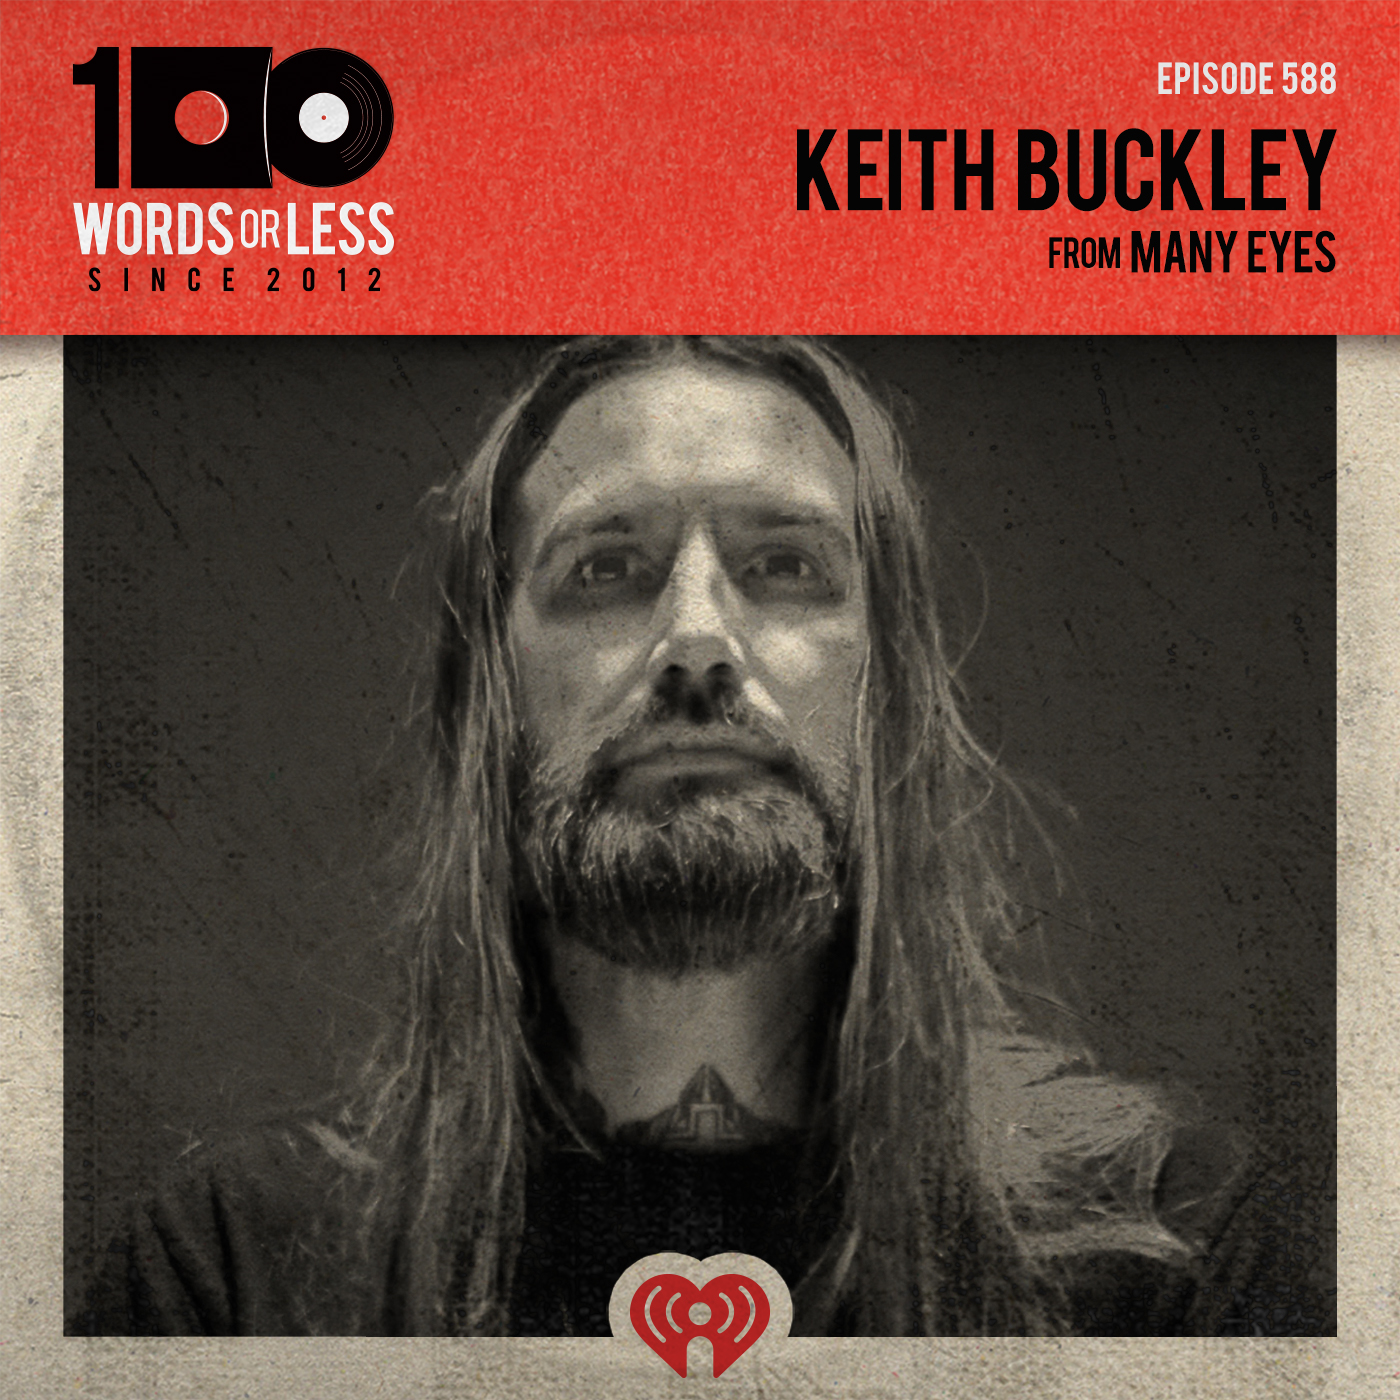 Keith Buckley from Many Eyes